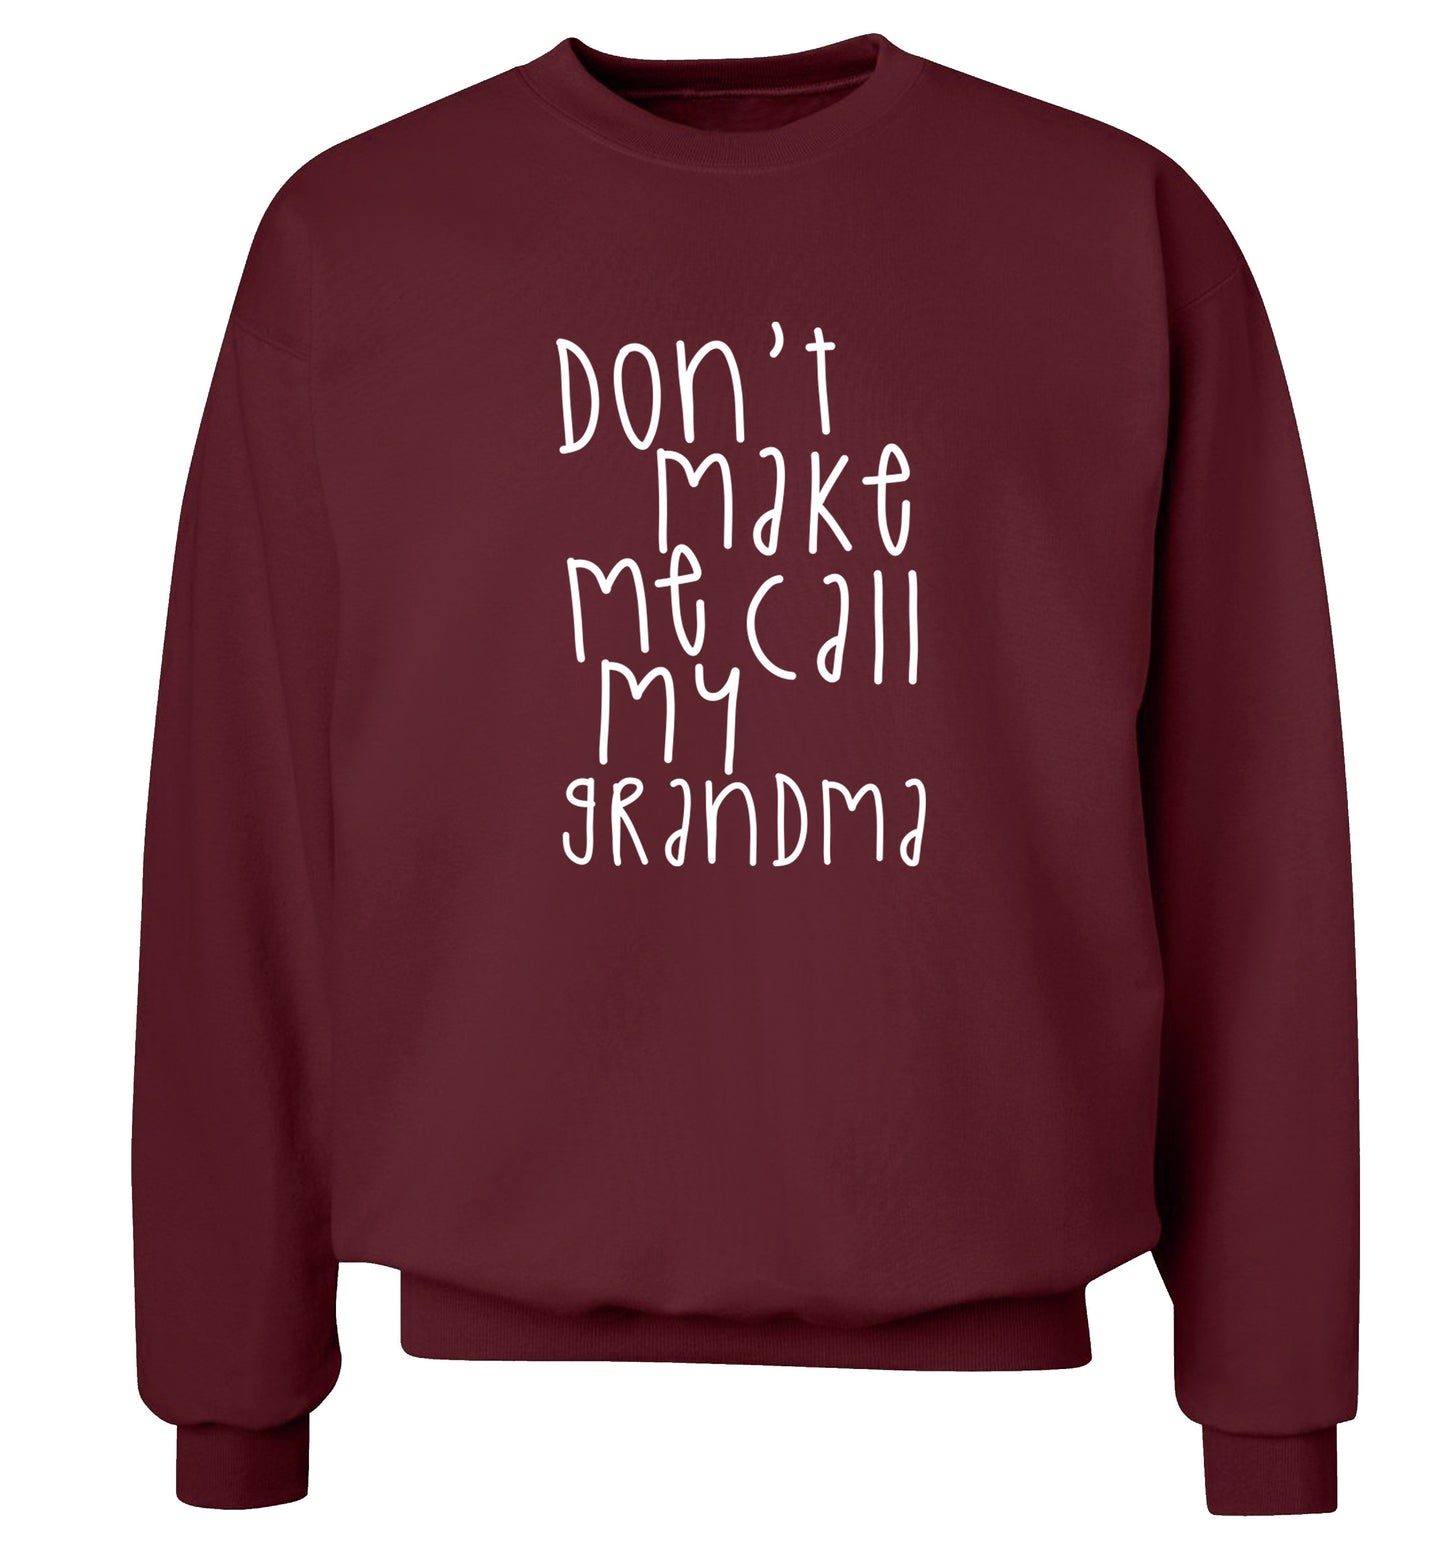 Don't make me call my grandma Adult's unisex maroon Sweater 2XL